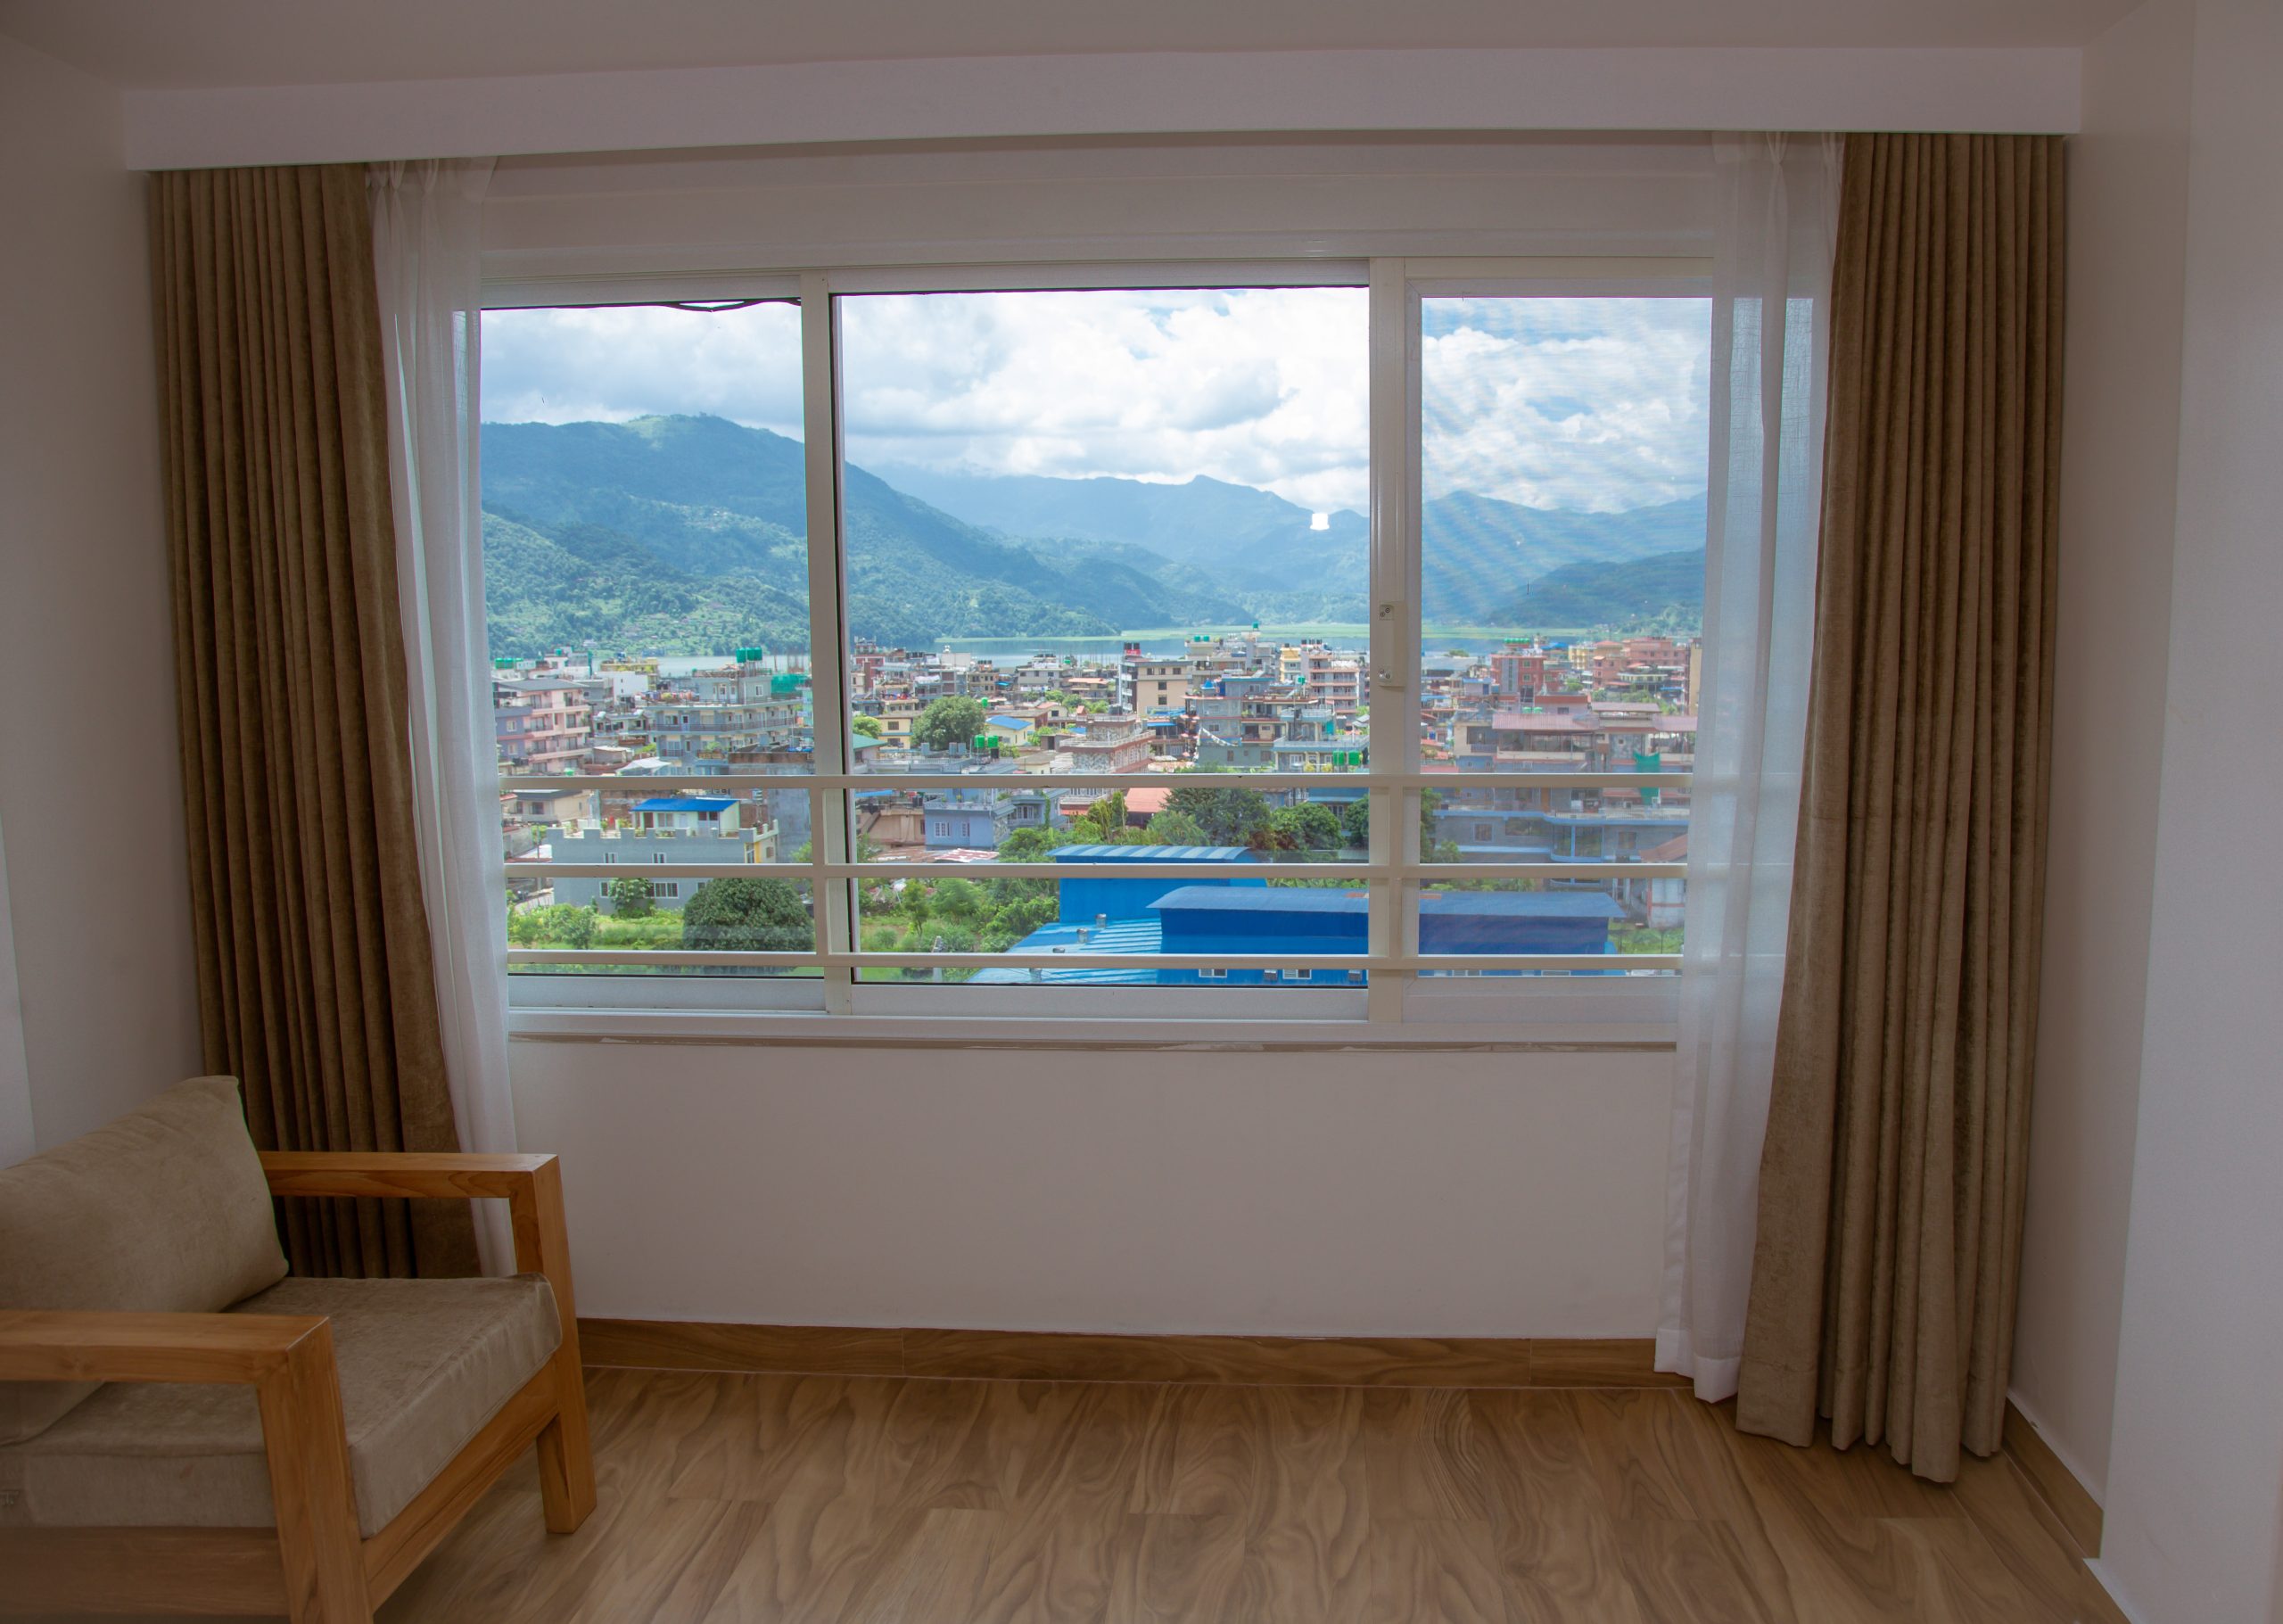 Stay Inn Hotel - Room View